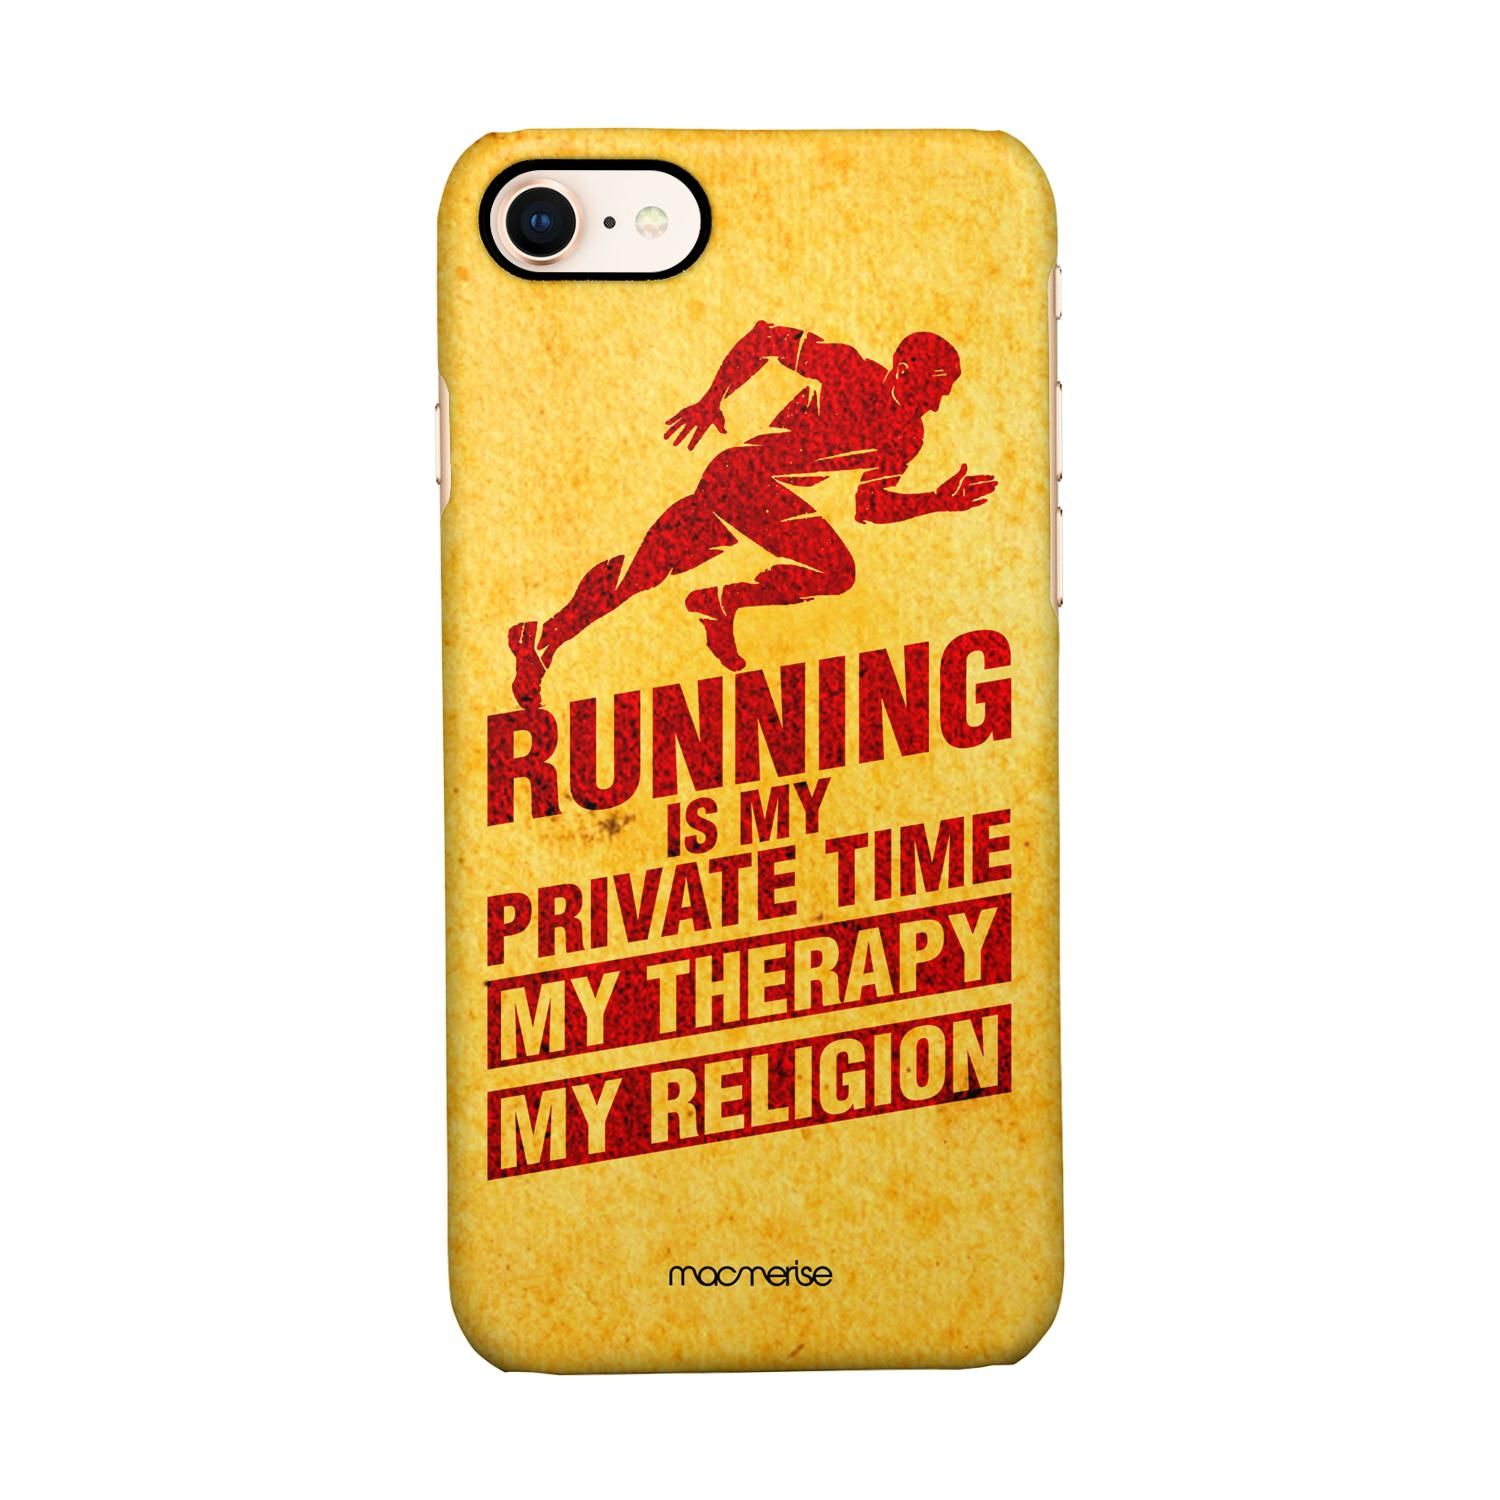 Buy Religion Of Running - Sleek Phone Case for iPhone 7 Online